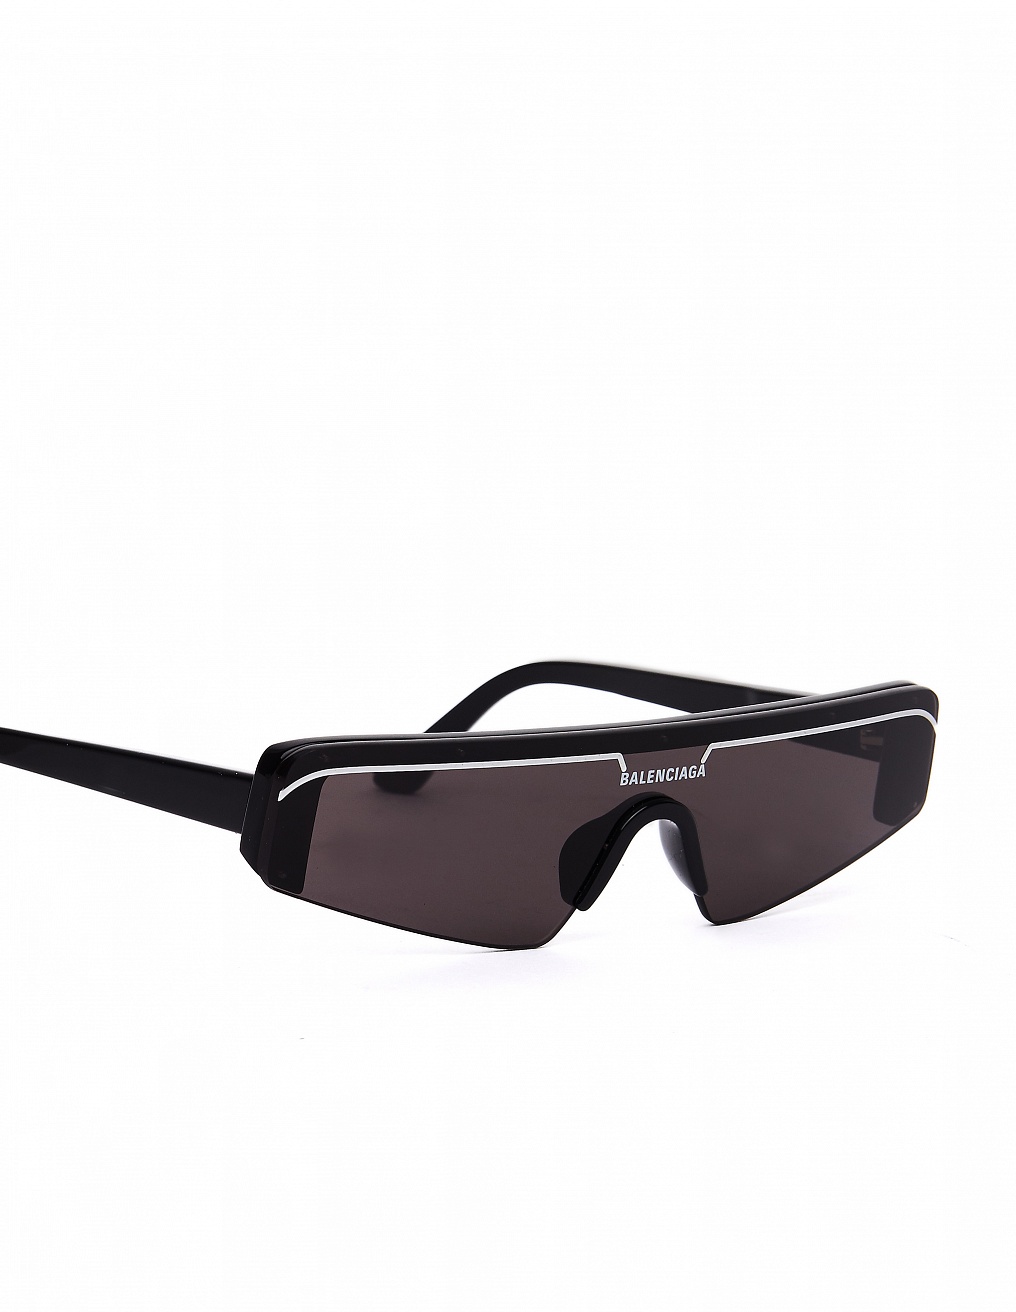 Черные очки Ski Rectangle Balenciaga 570483/T0001/1000/ss20, размер One Size 570483/T0001/1000/ss20 - фото 3